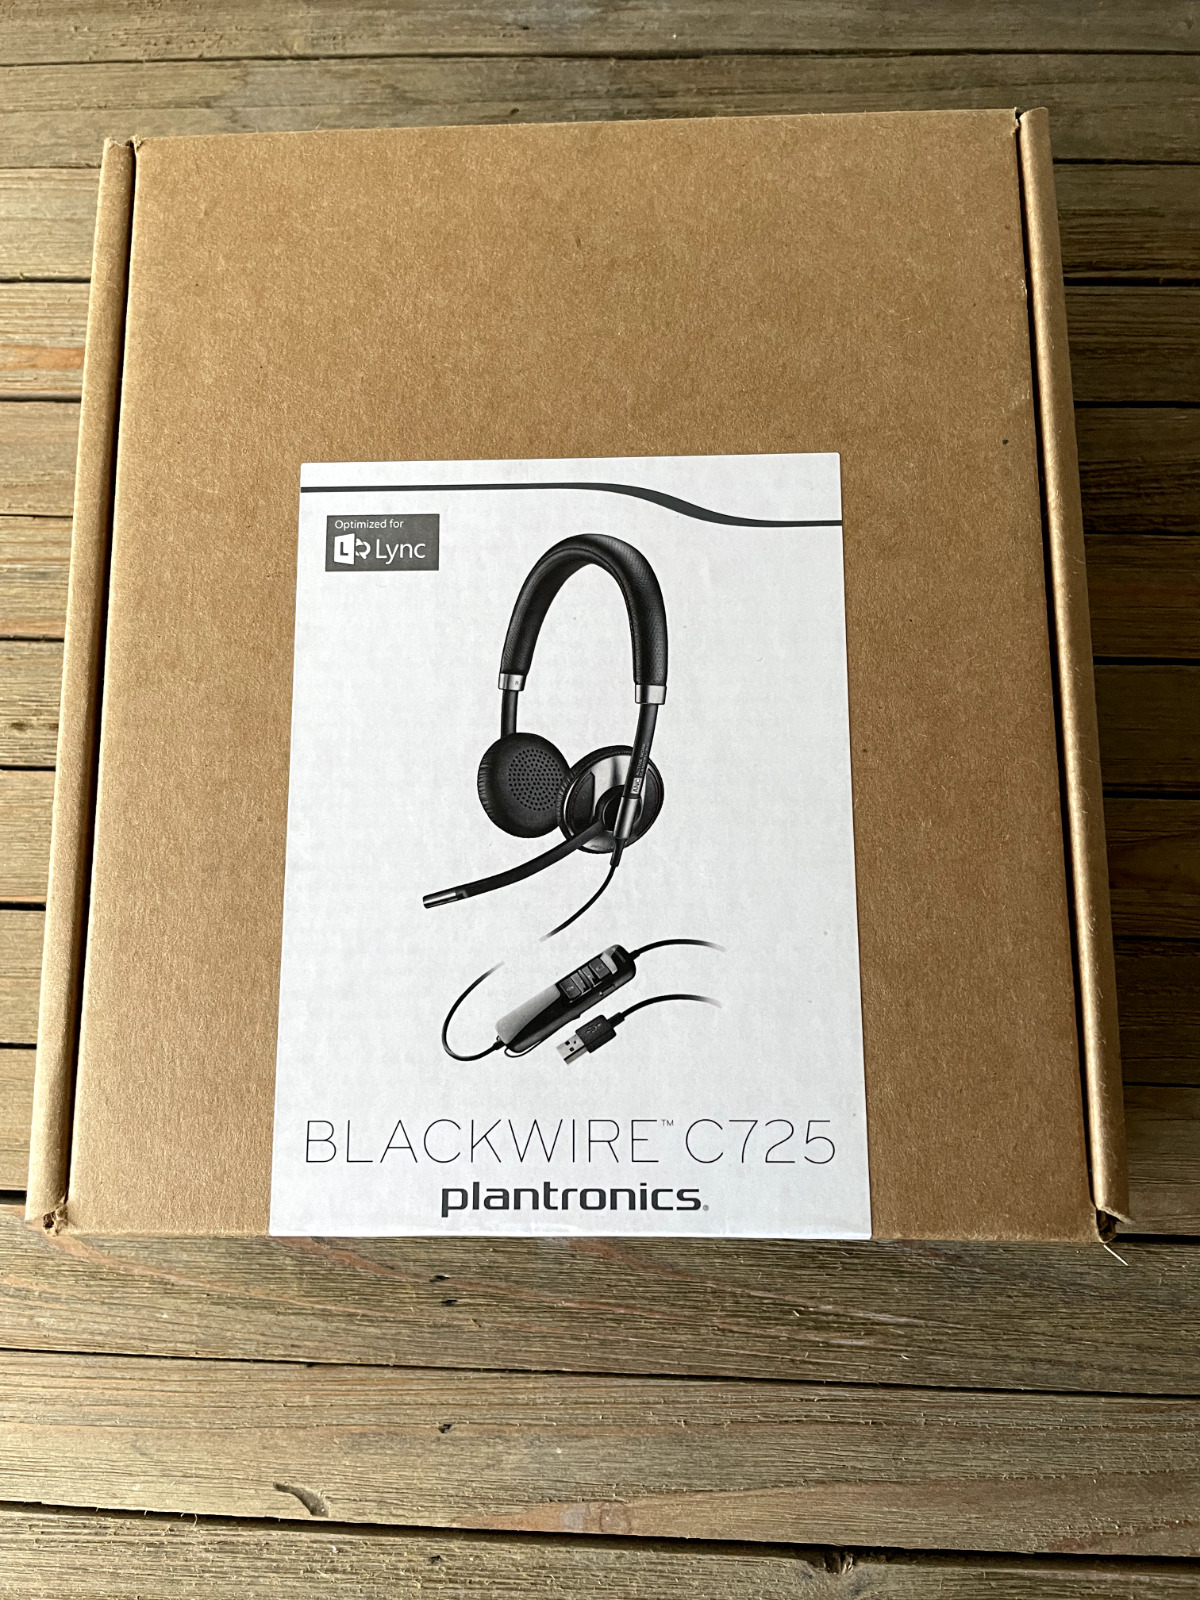 Plantronics Blackwire C725 - USB Headset Active Noise Canceling, New with case